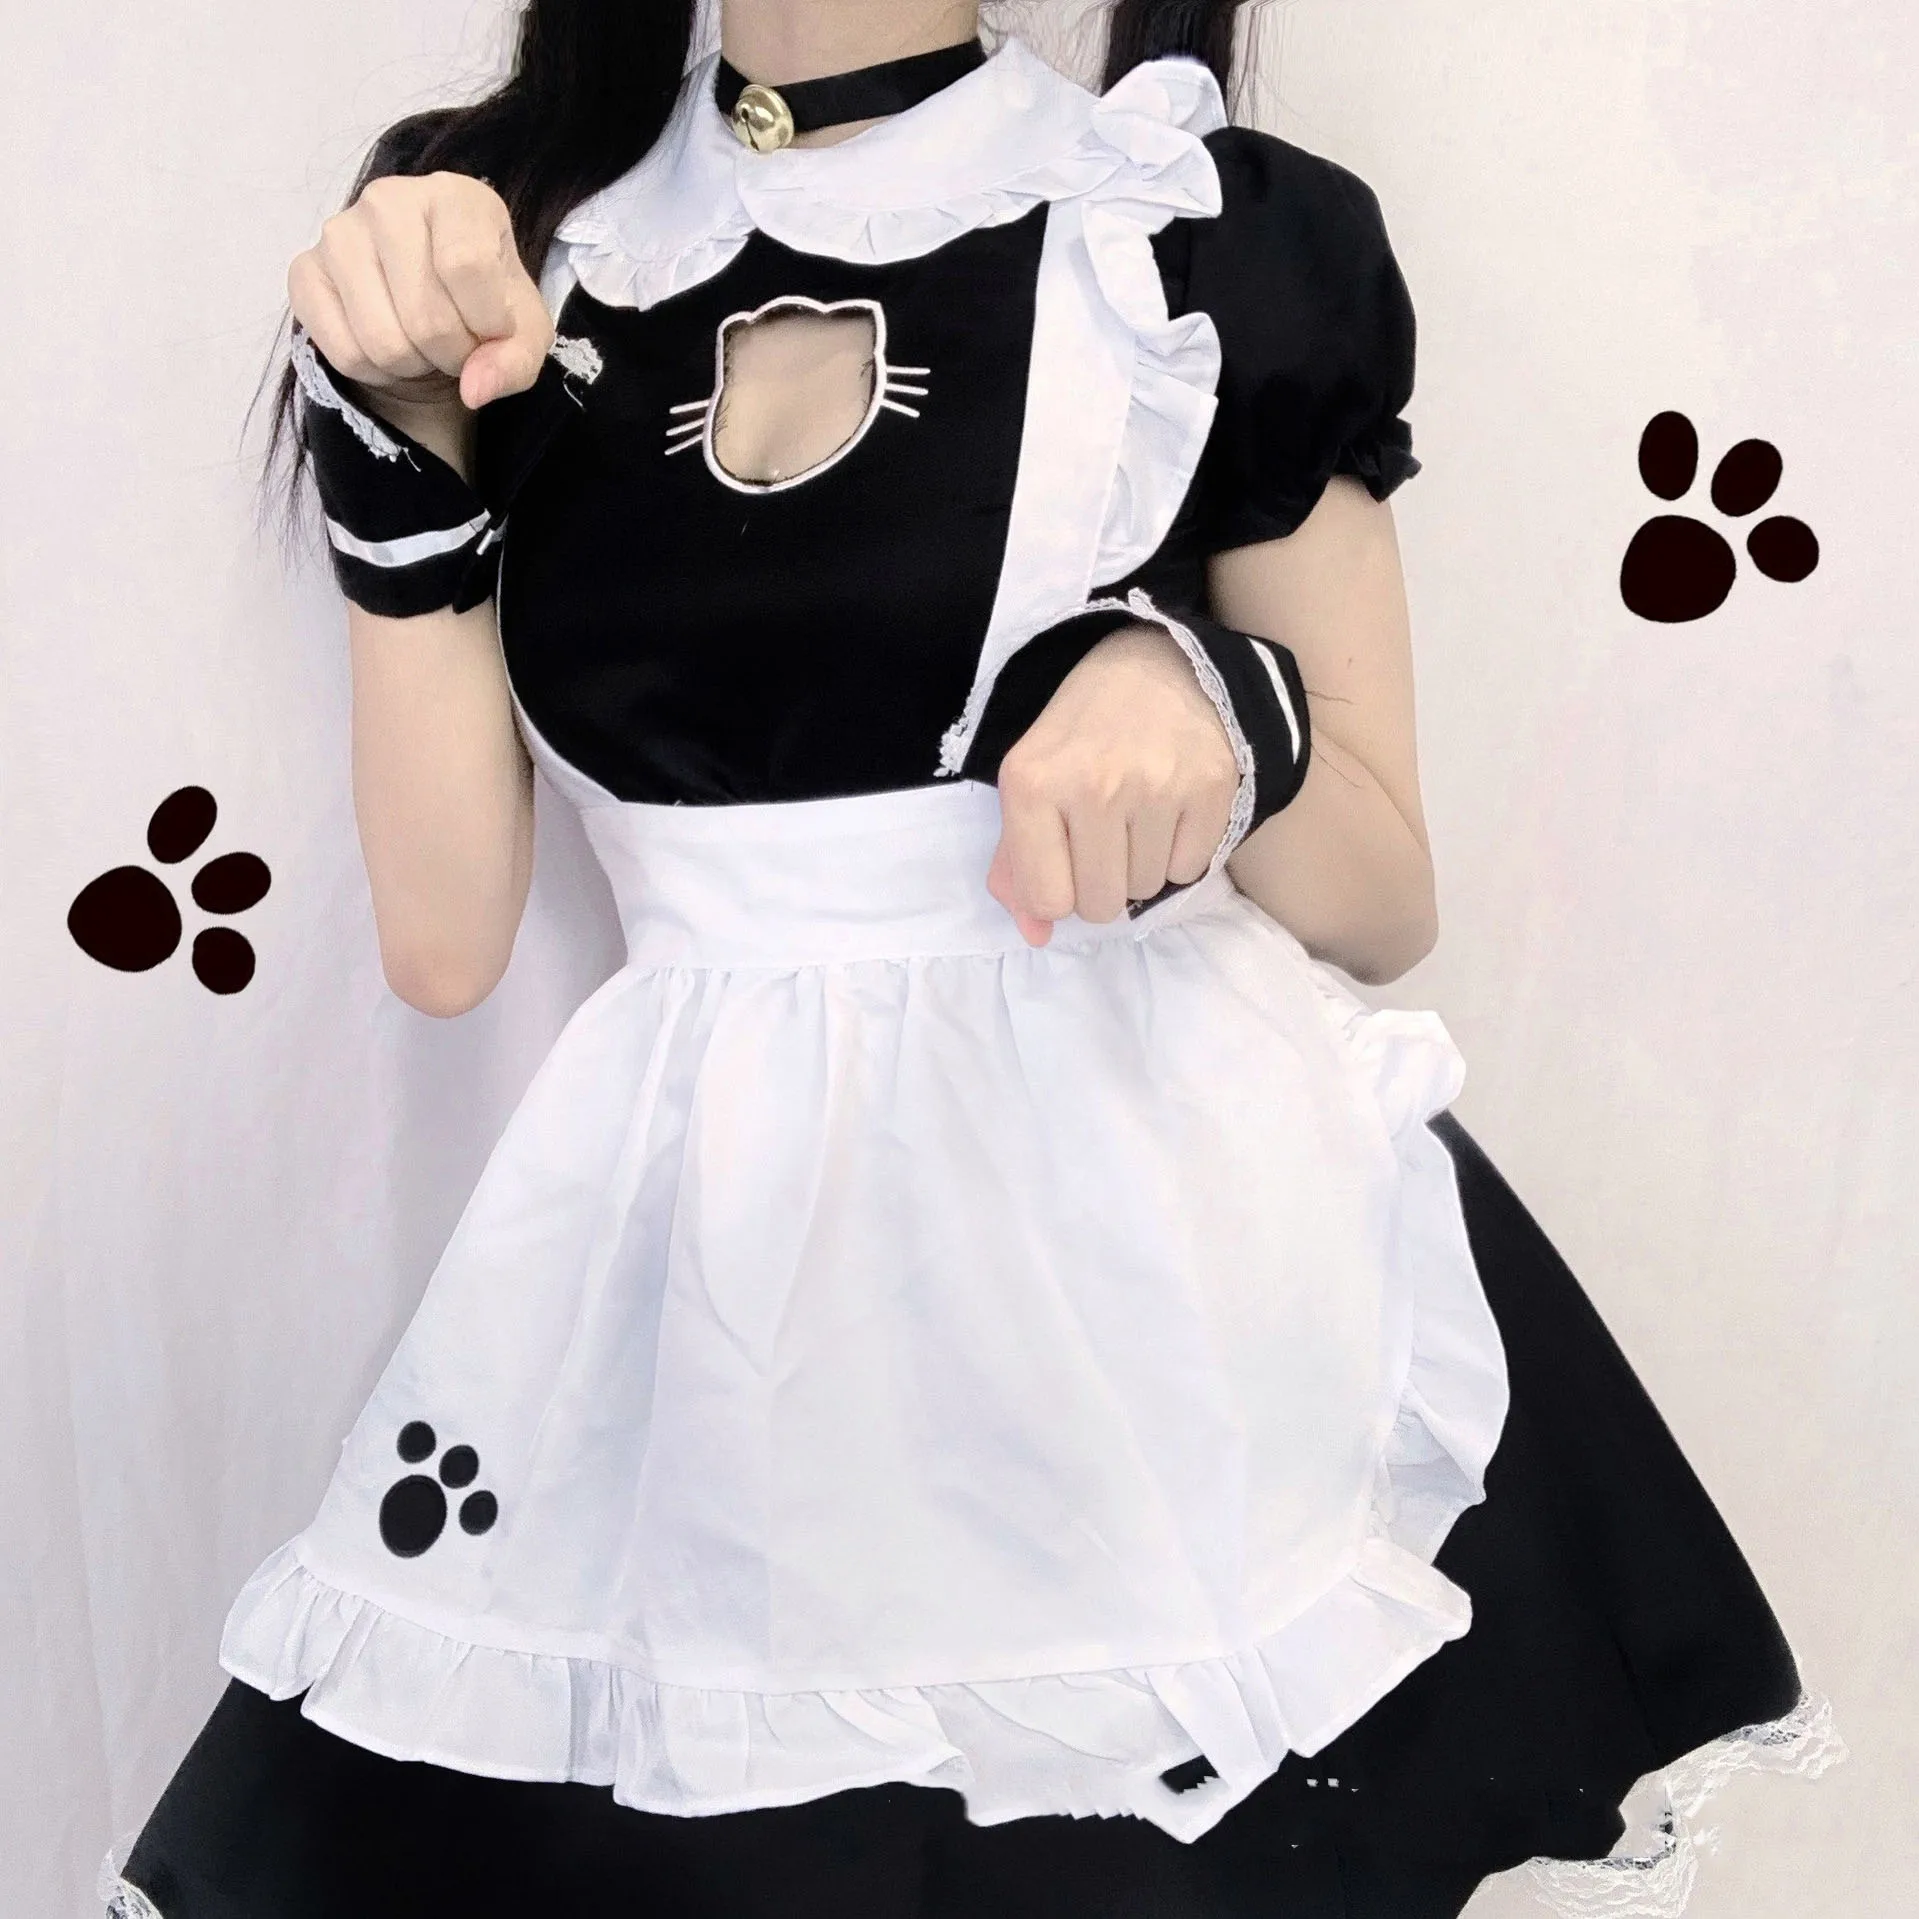 

Sexy Black Cat Girl Women Fantasy French Maid Outfit Men Gothic Sweet Lolita Dress Anime Cosplay Costume Plus Size XXXL XXXXL